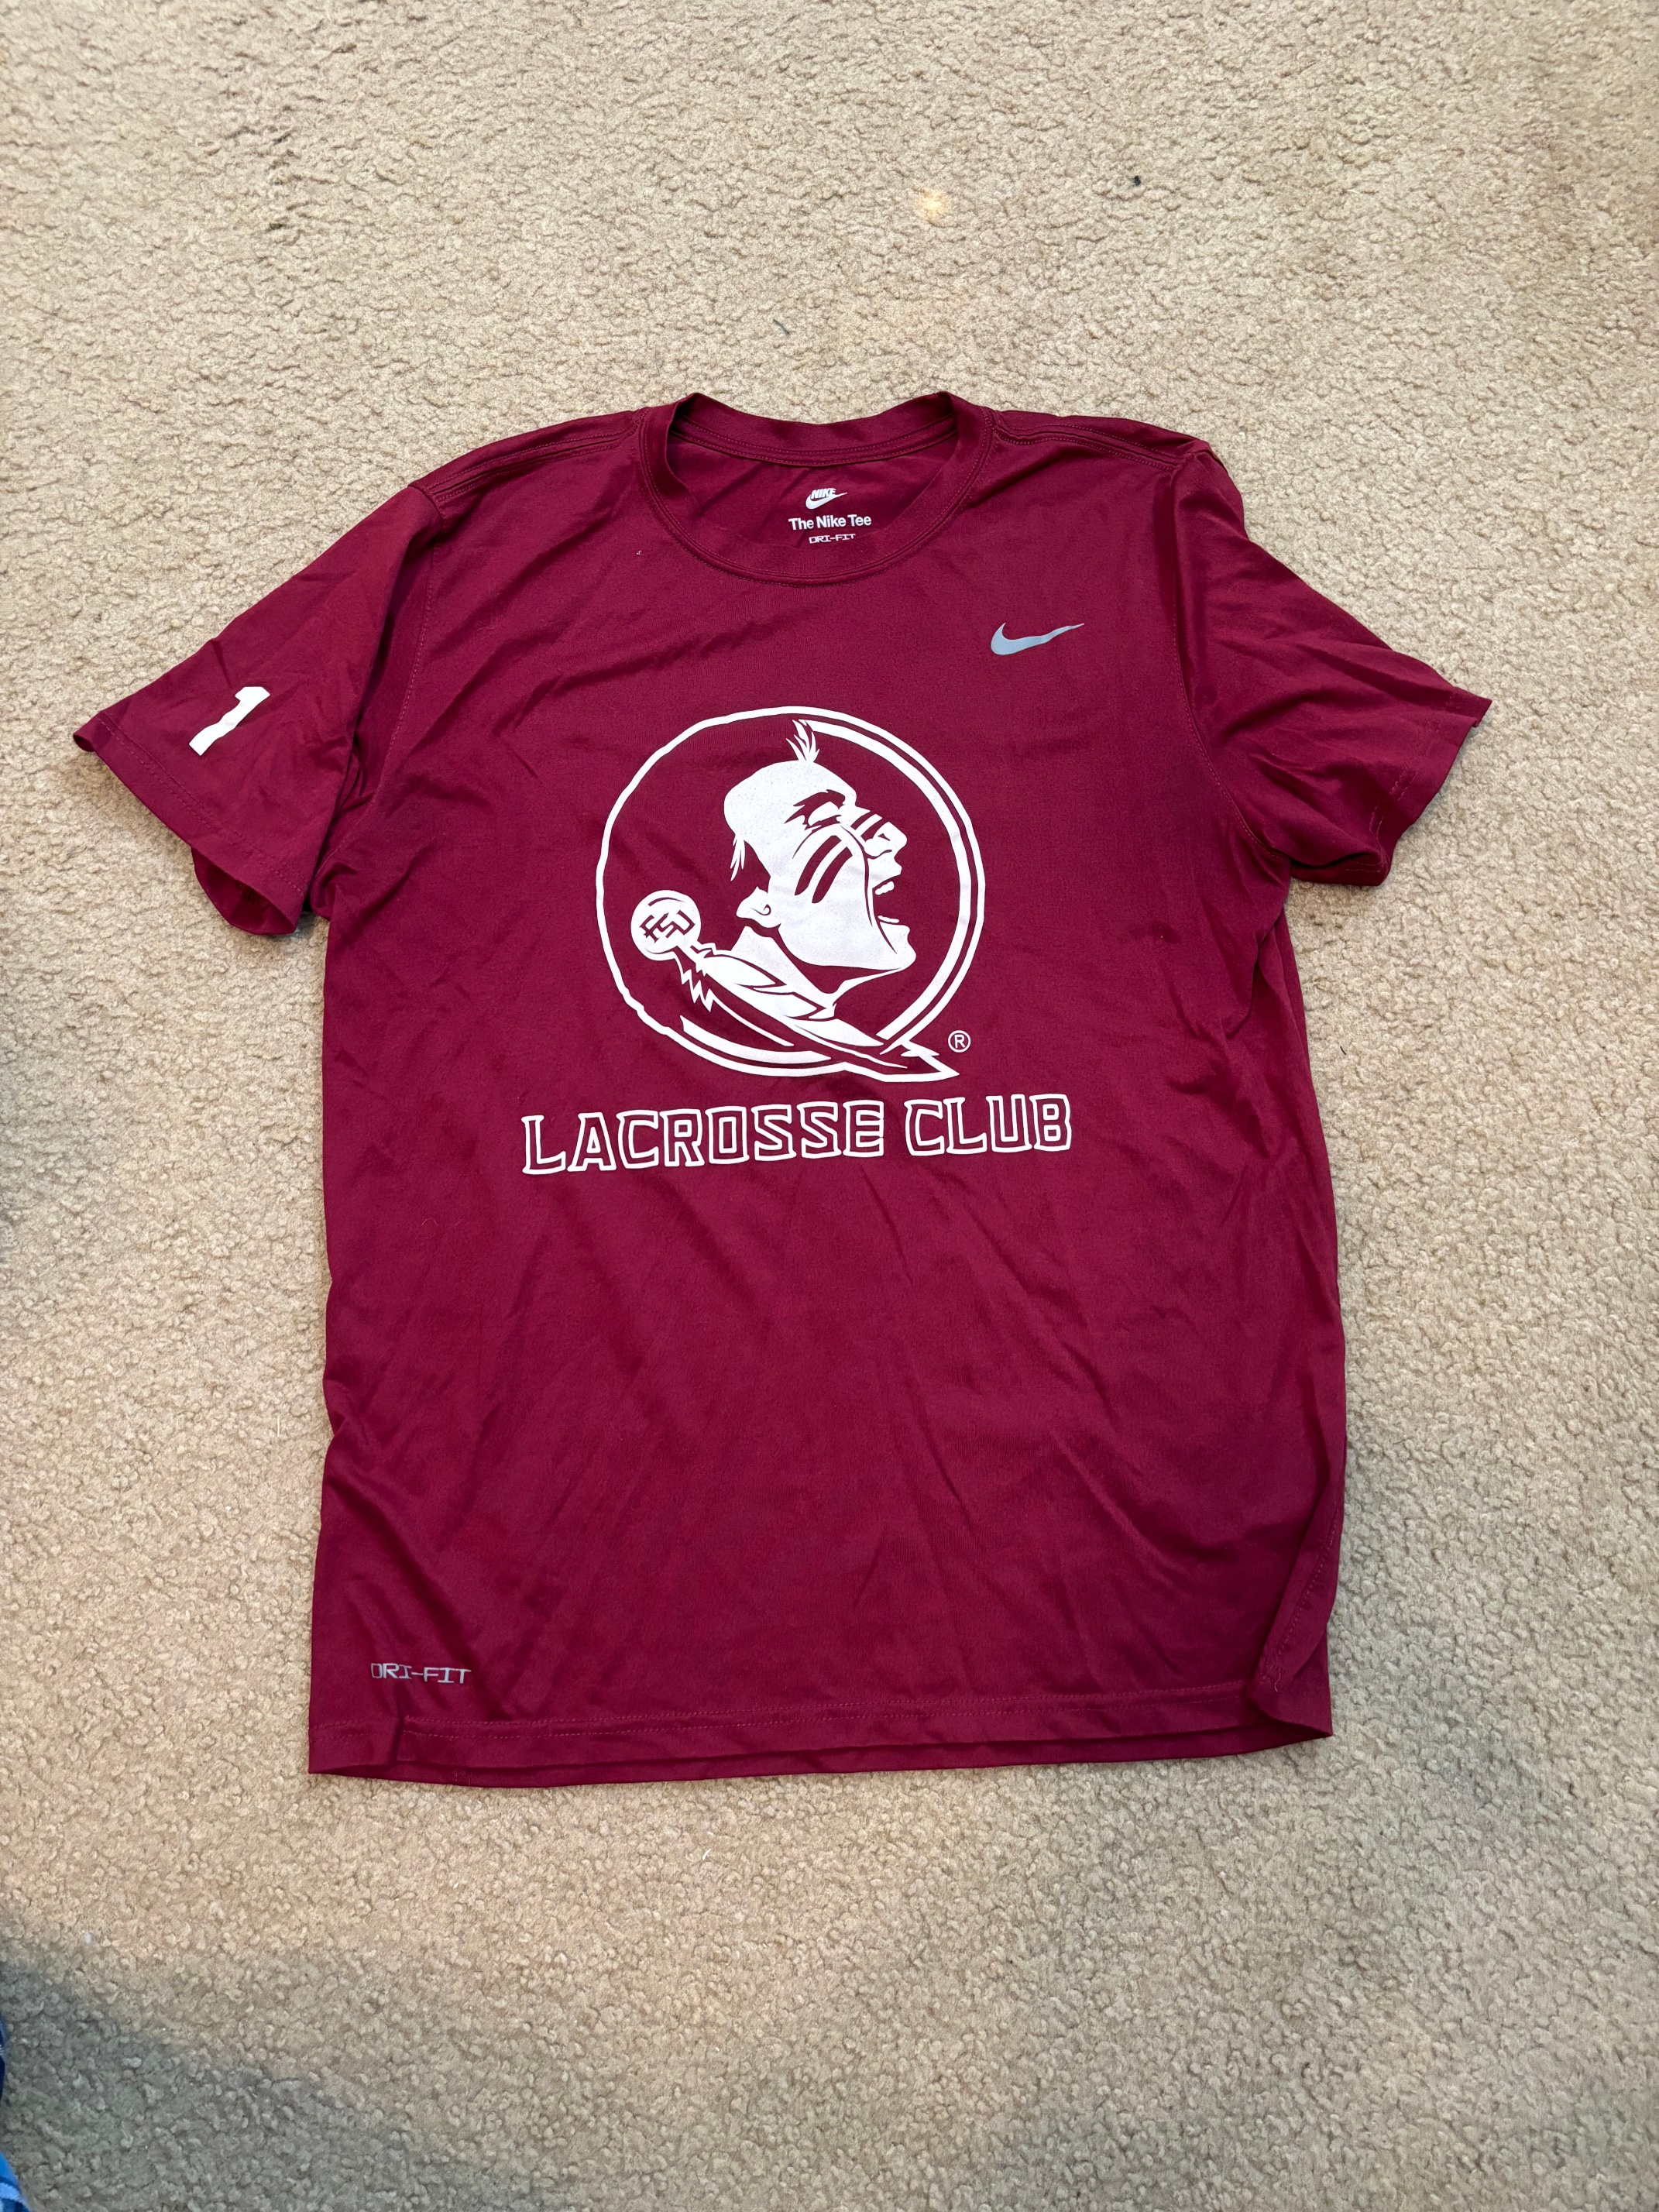 FSU Lacrosse shooter shirt #1 team issued